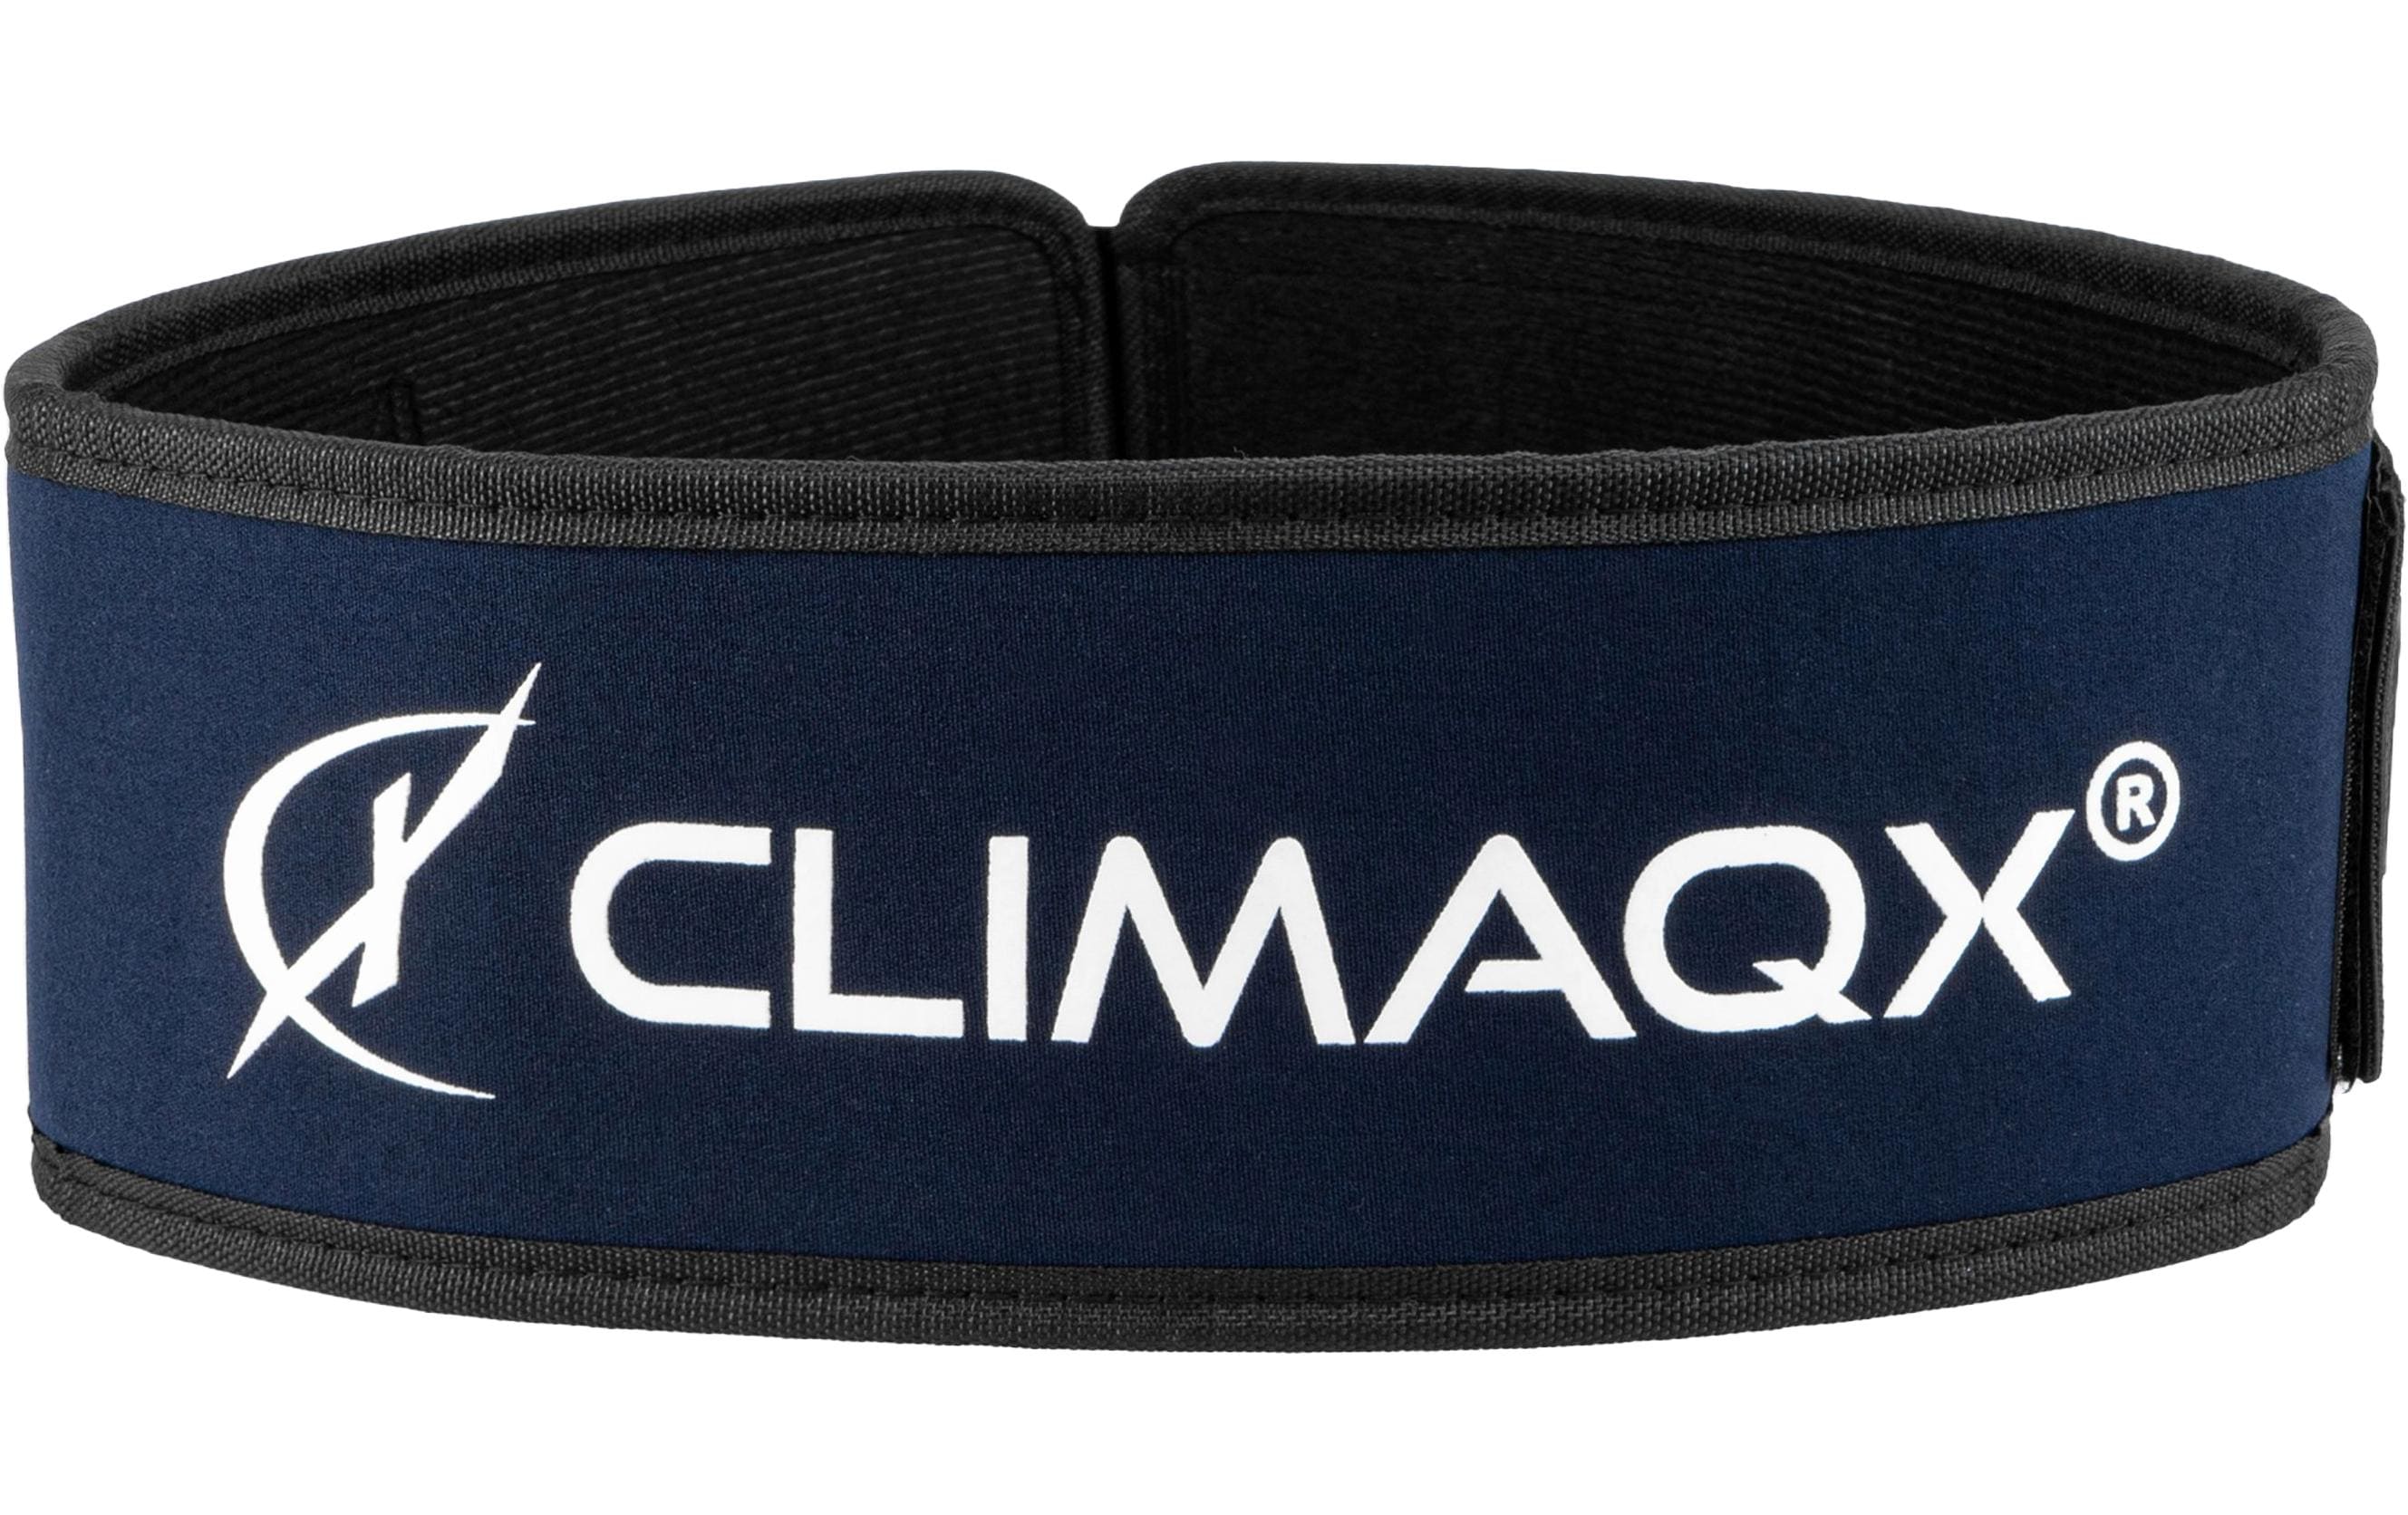 Climaqx Evolution Lifting Belt S